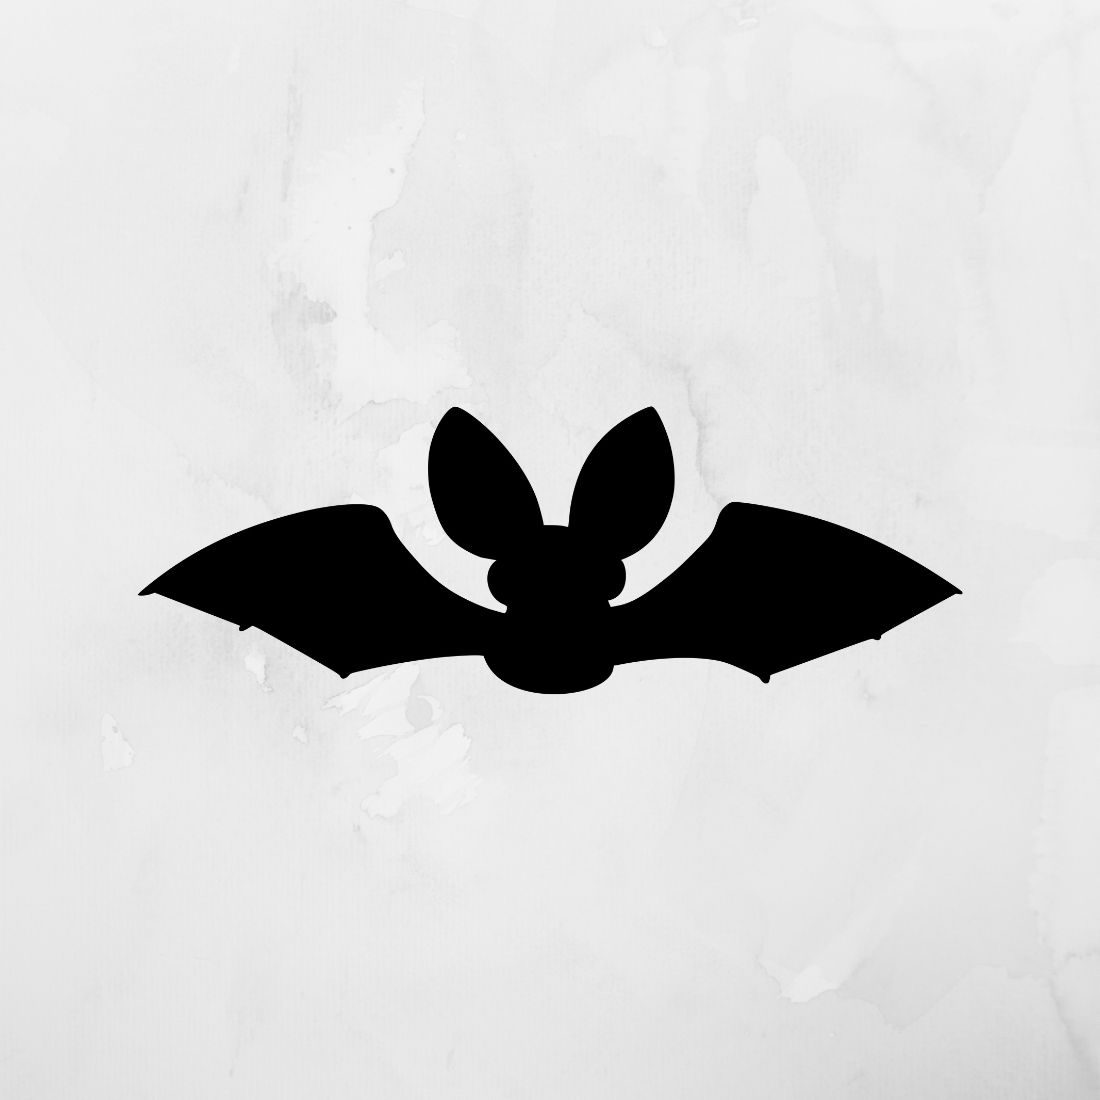 Bat Silhouette preview.